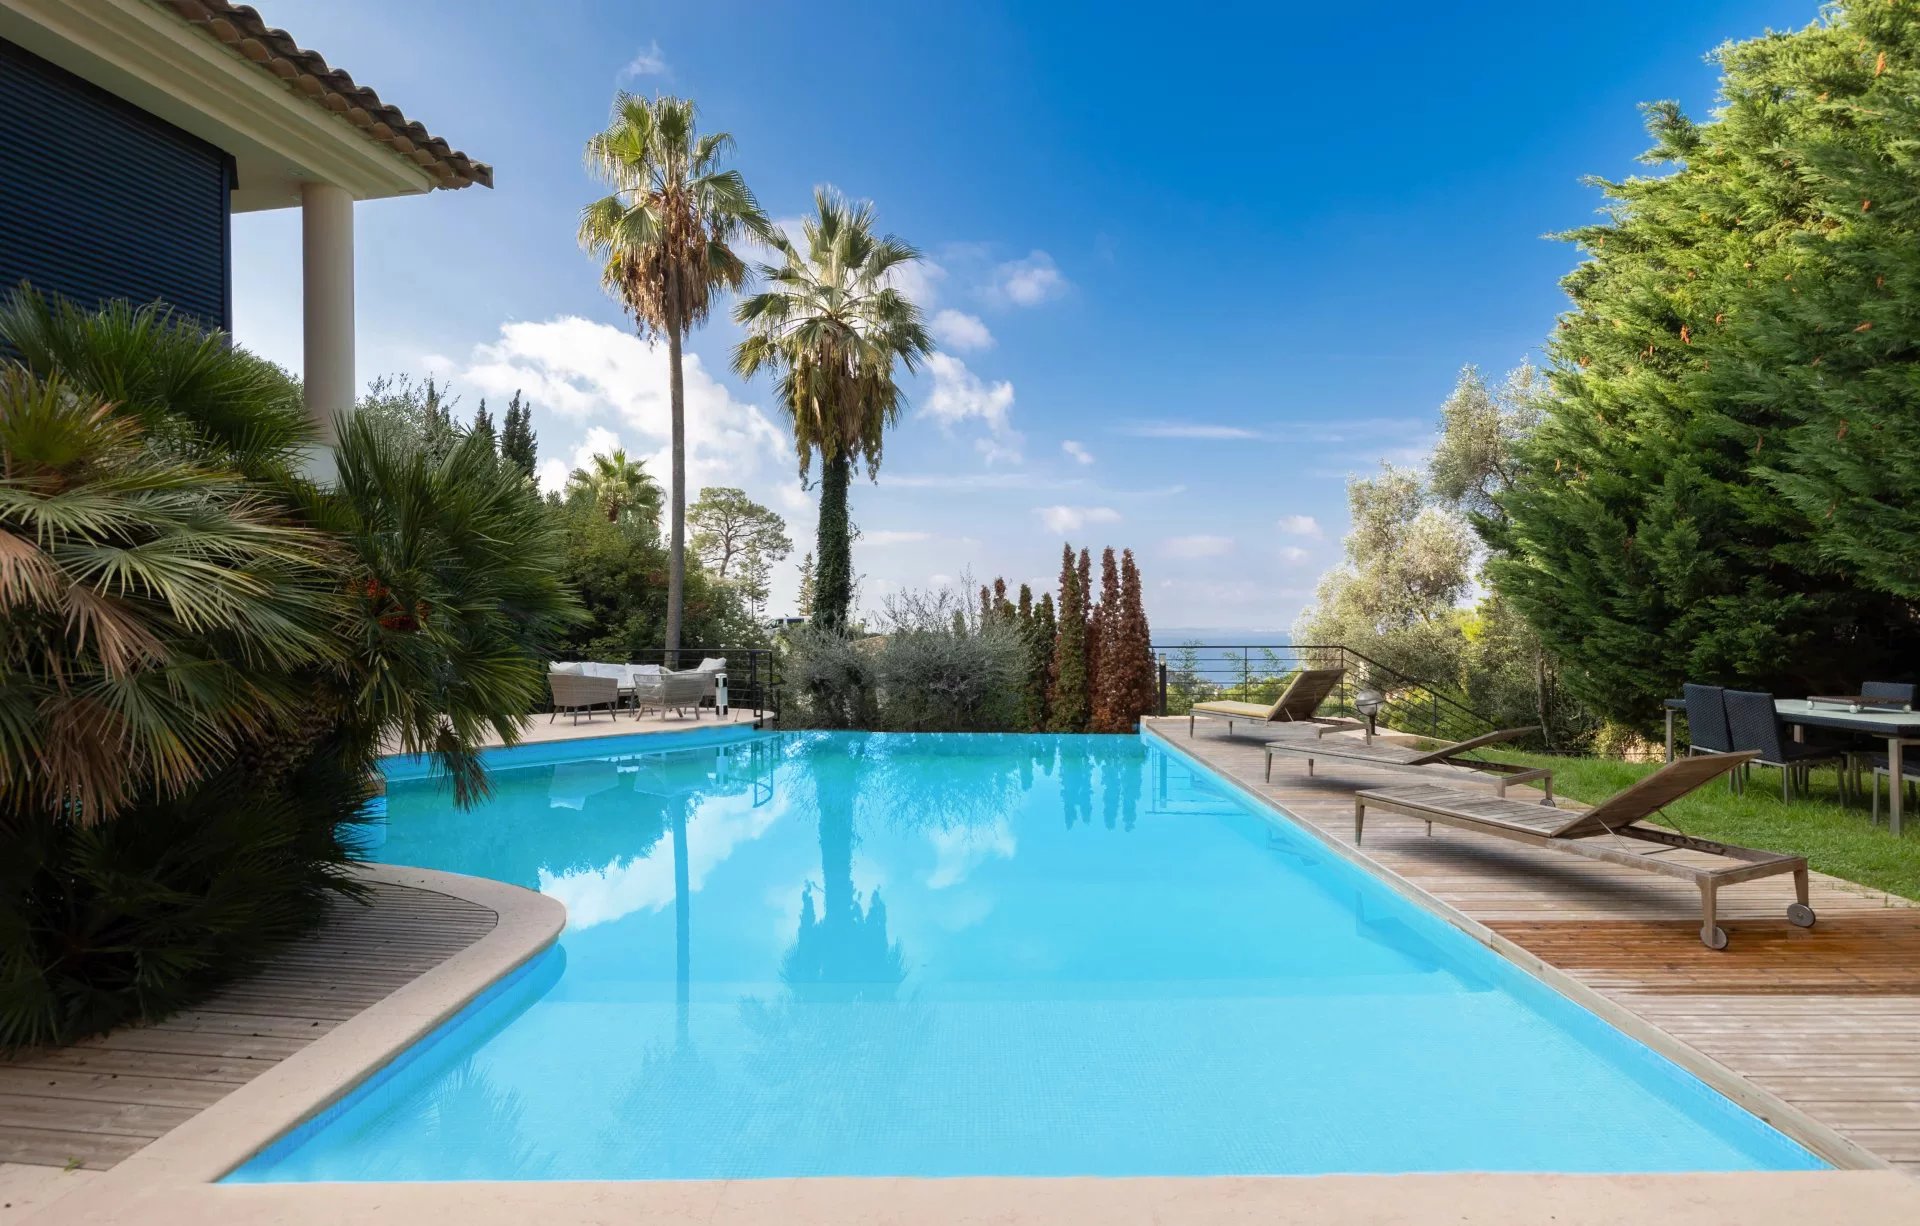 Modern villa  with swimming pool in Villefranche sur mer - Private estate.